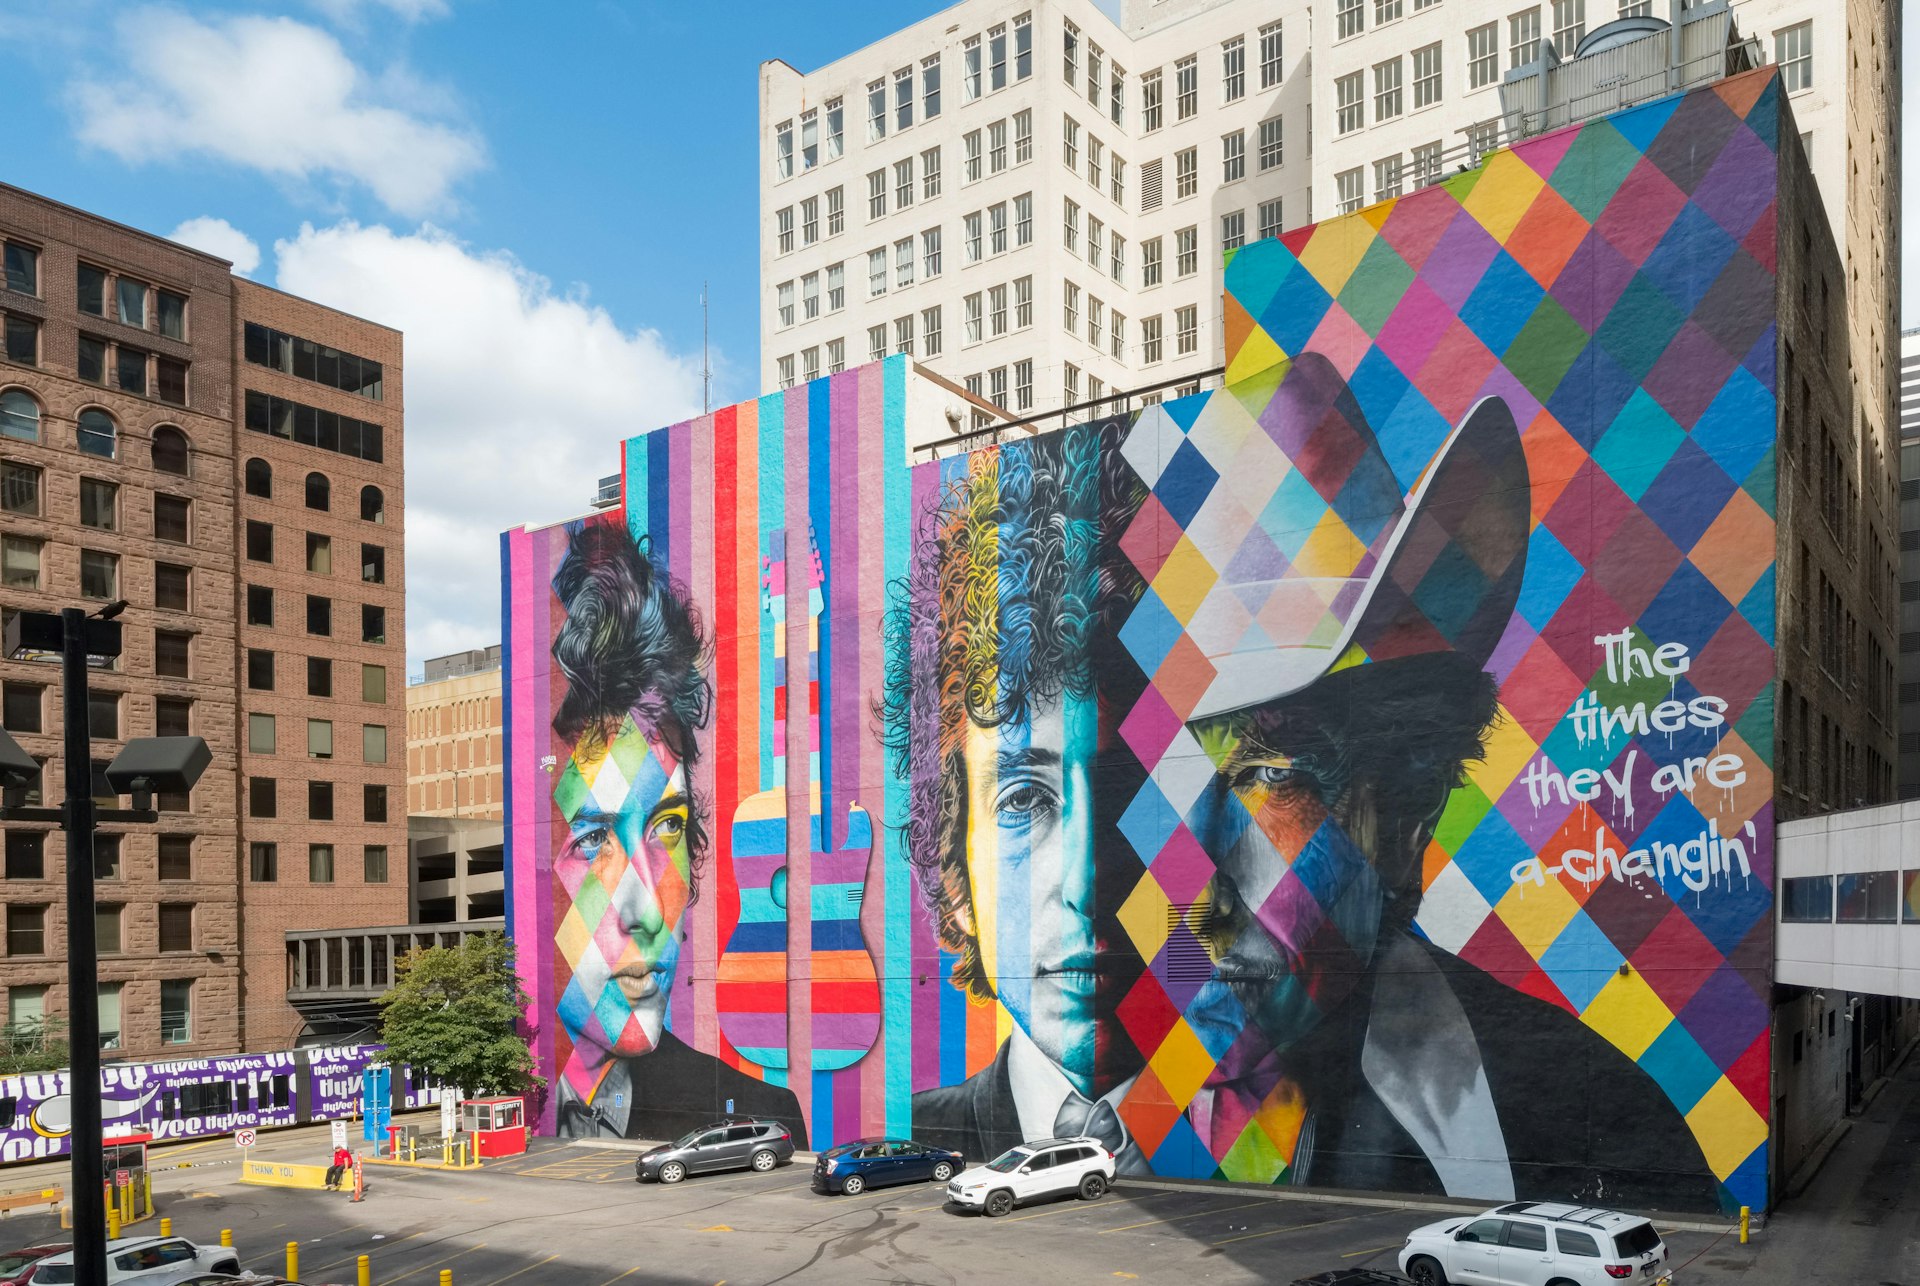 Bob Dylan Mural in downtown Minneapolis by street artist Eduardo Kobra